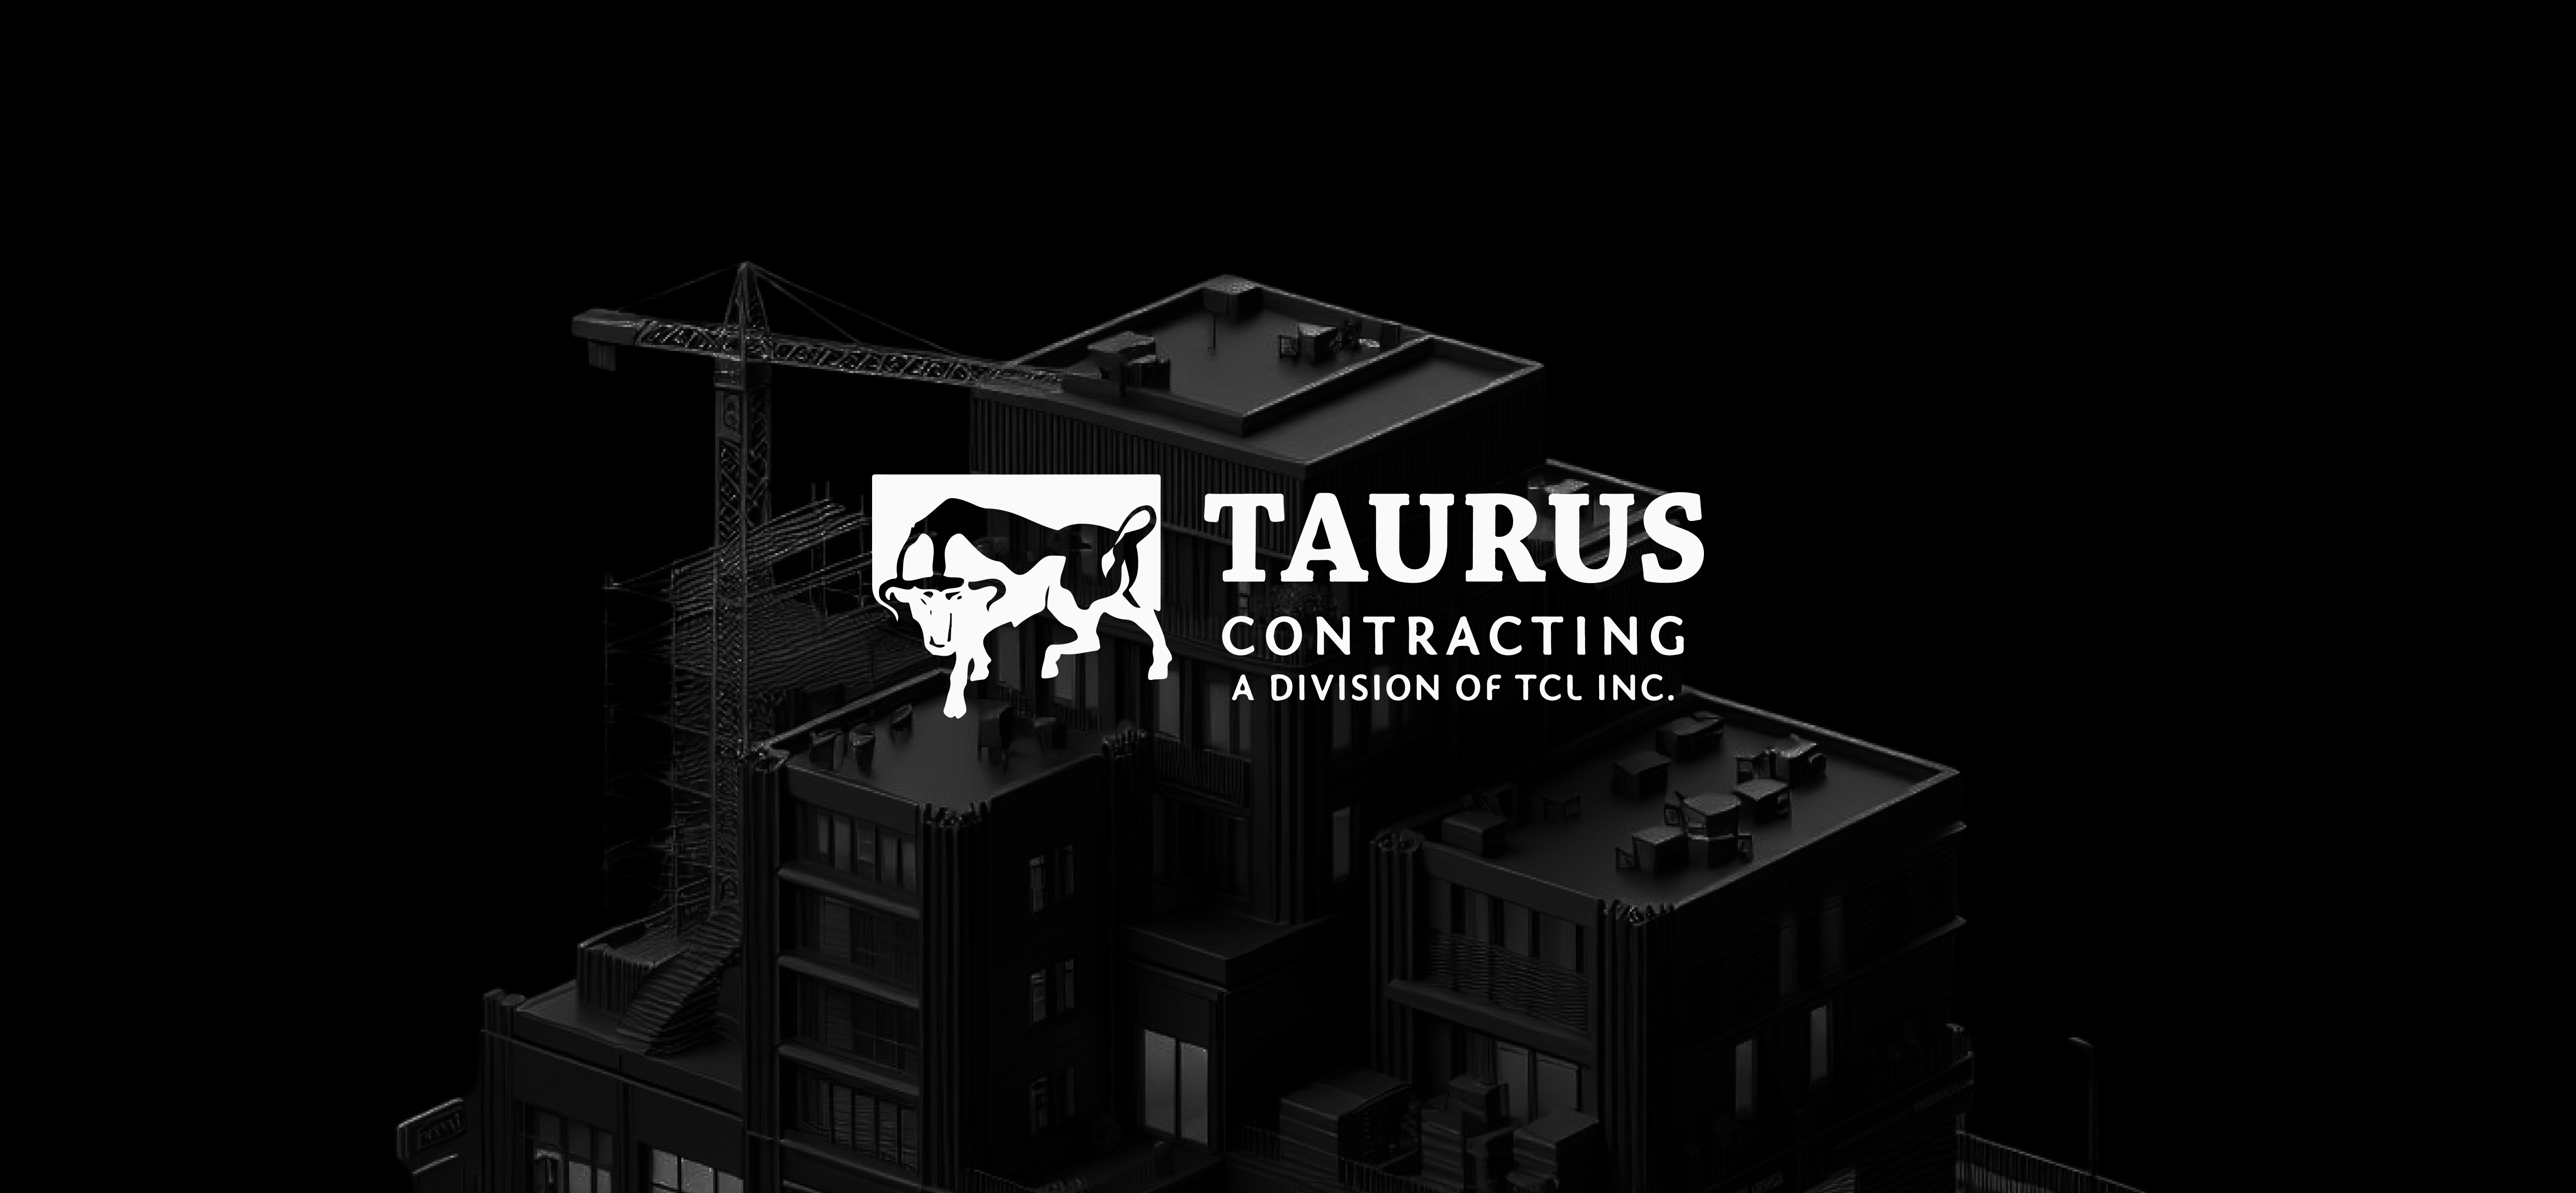 Taurus Contracting case study hero image